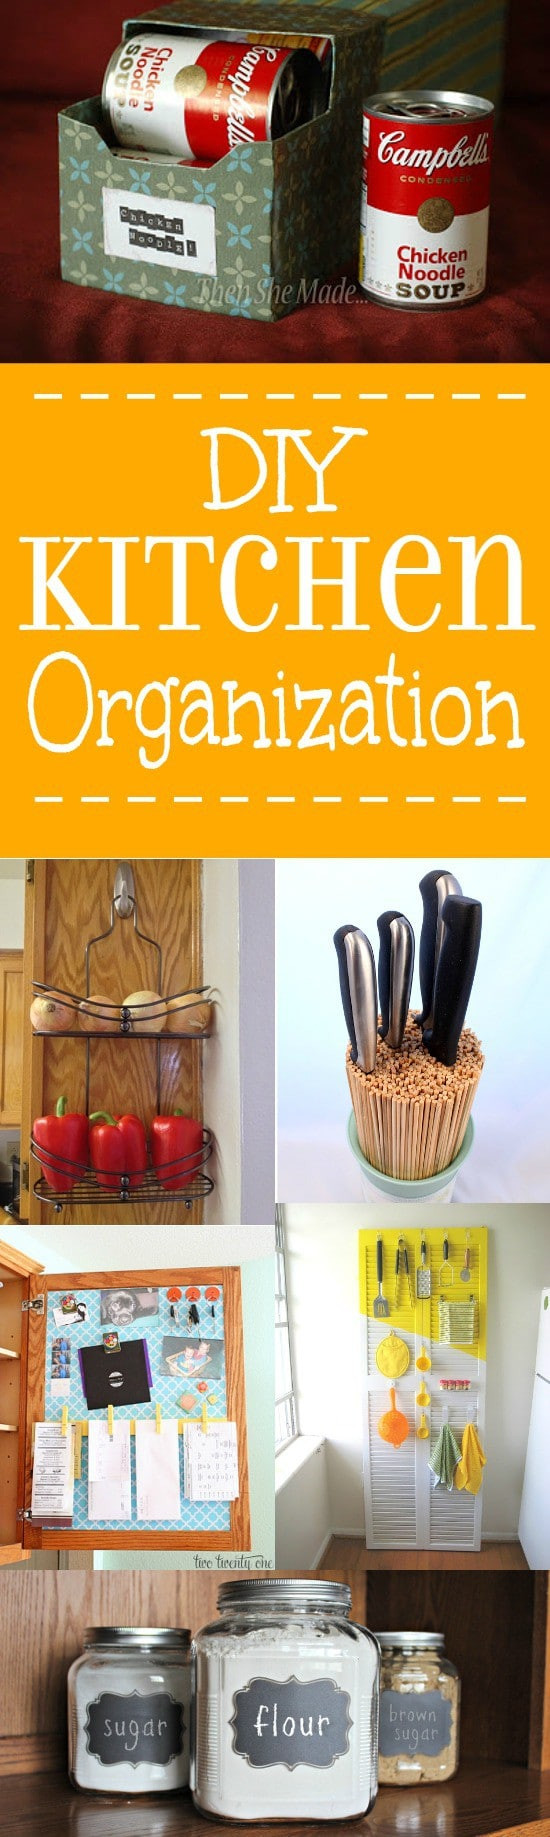 Pinterest DIY Organization
 24 DIY Kitchen Organization Ideas